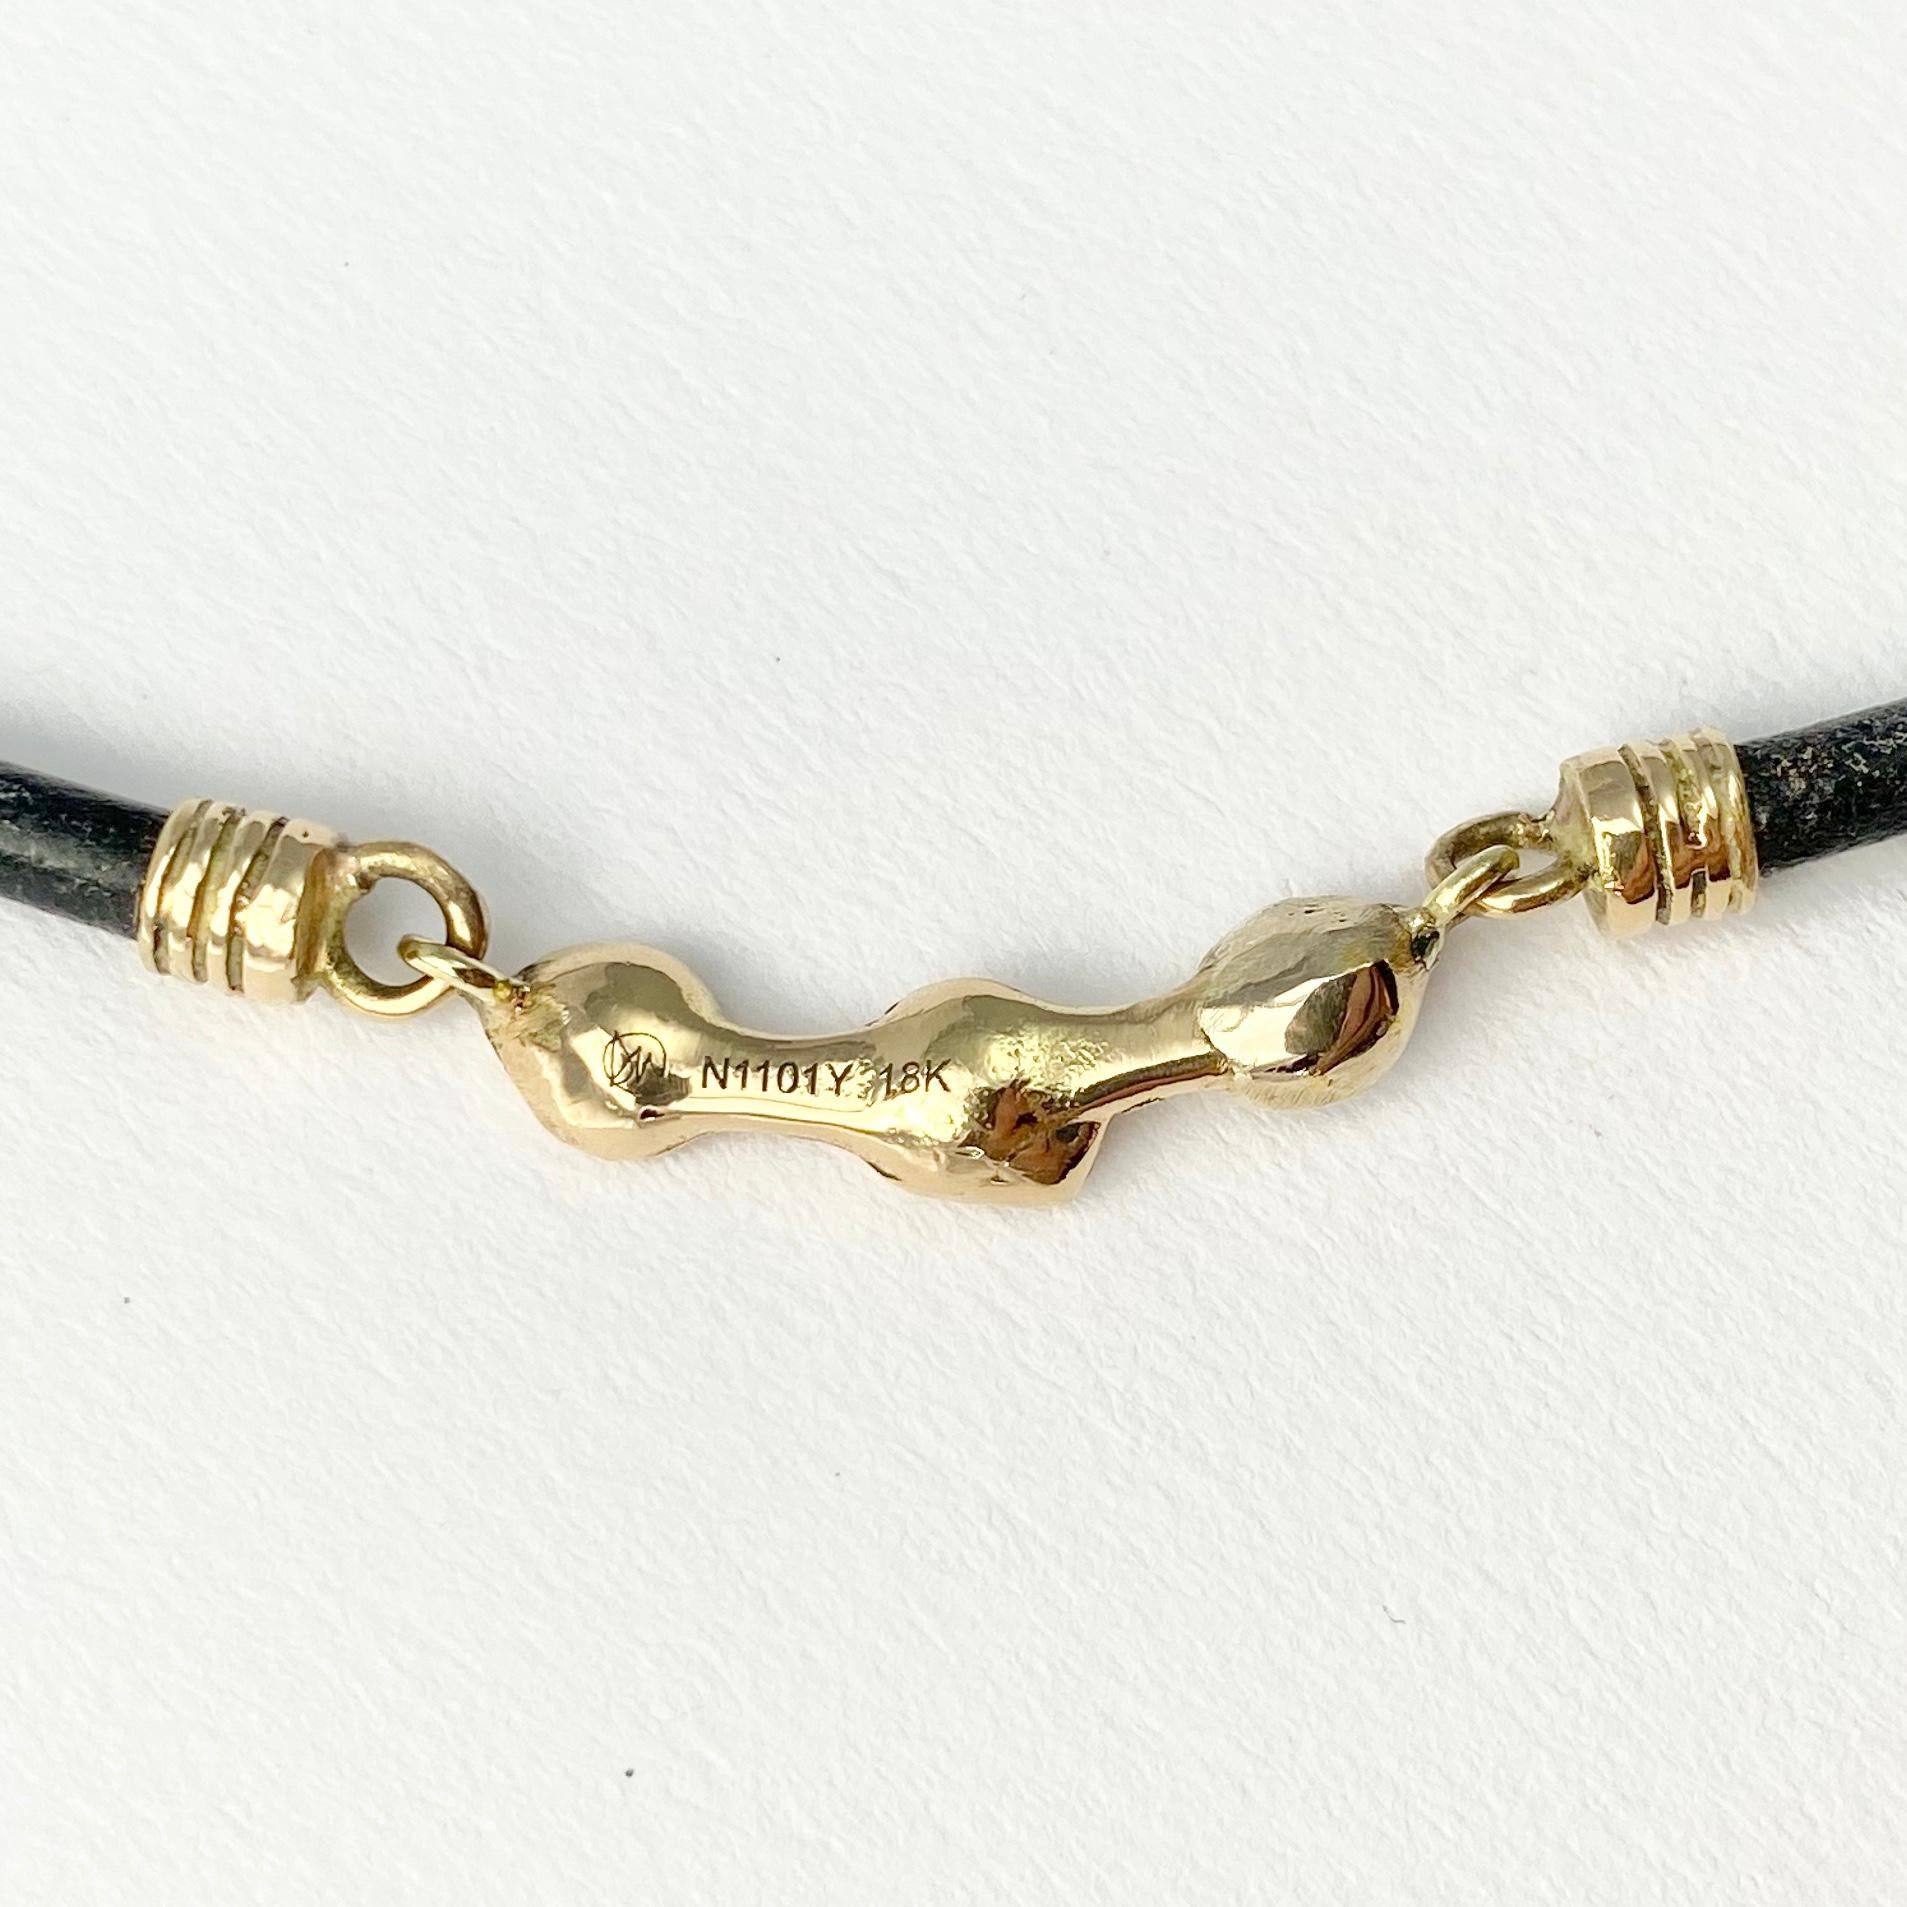 Debra Navarro Diamond and 18 Karat Yellow Gold Necklace with Black Leather Cord In New Condition For Sale In Wichita, KS